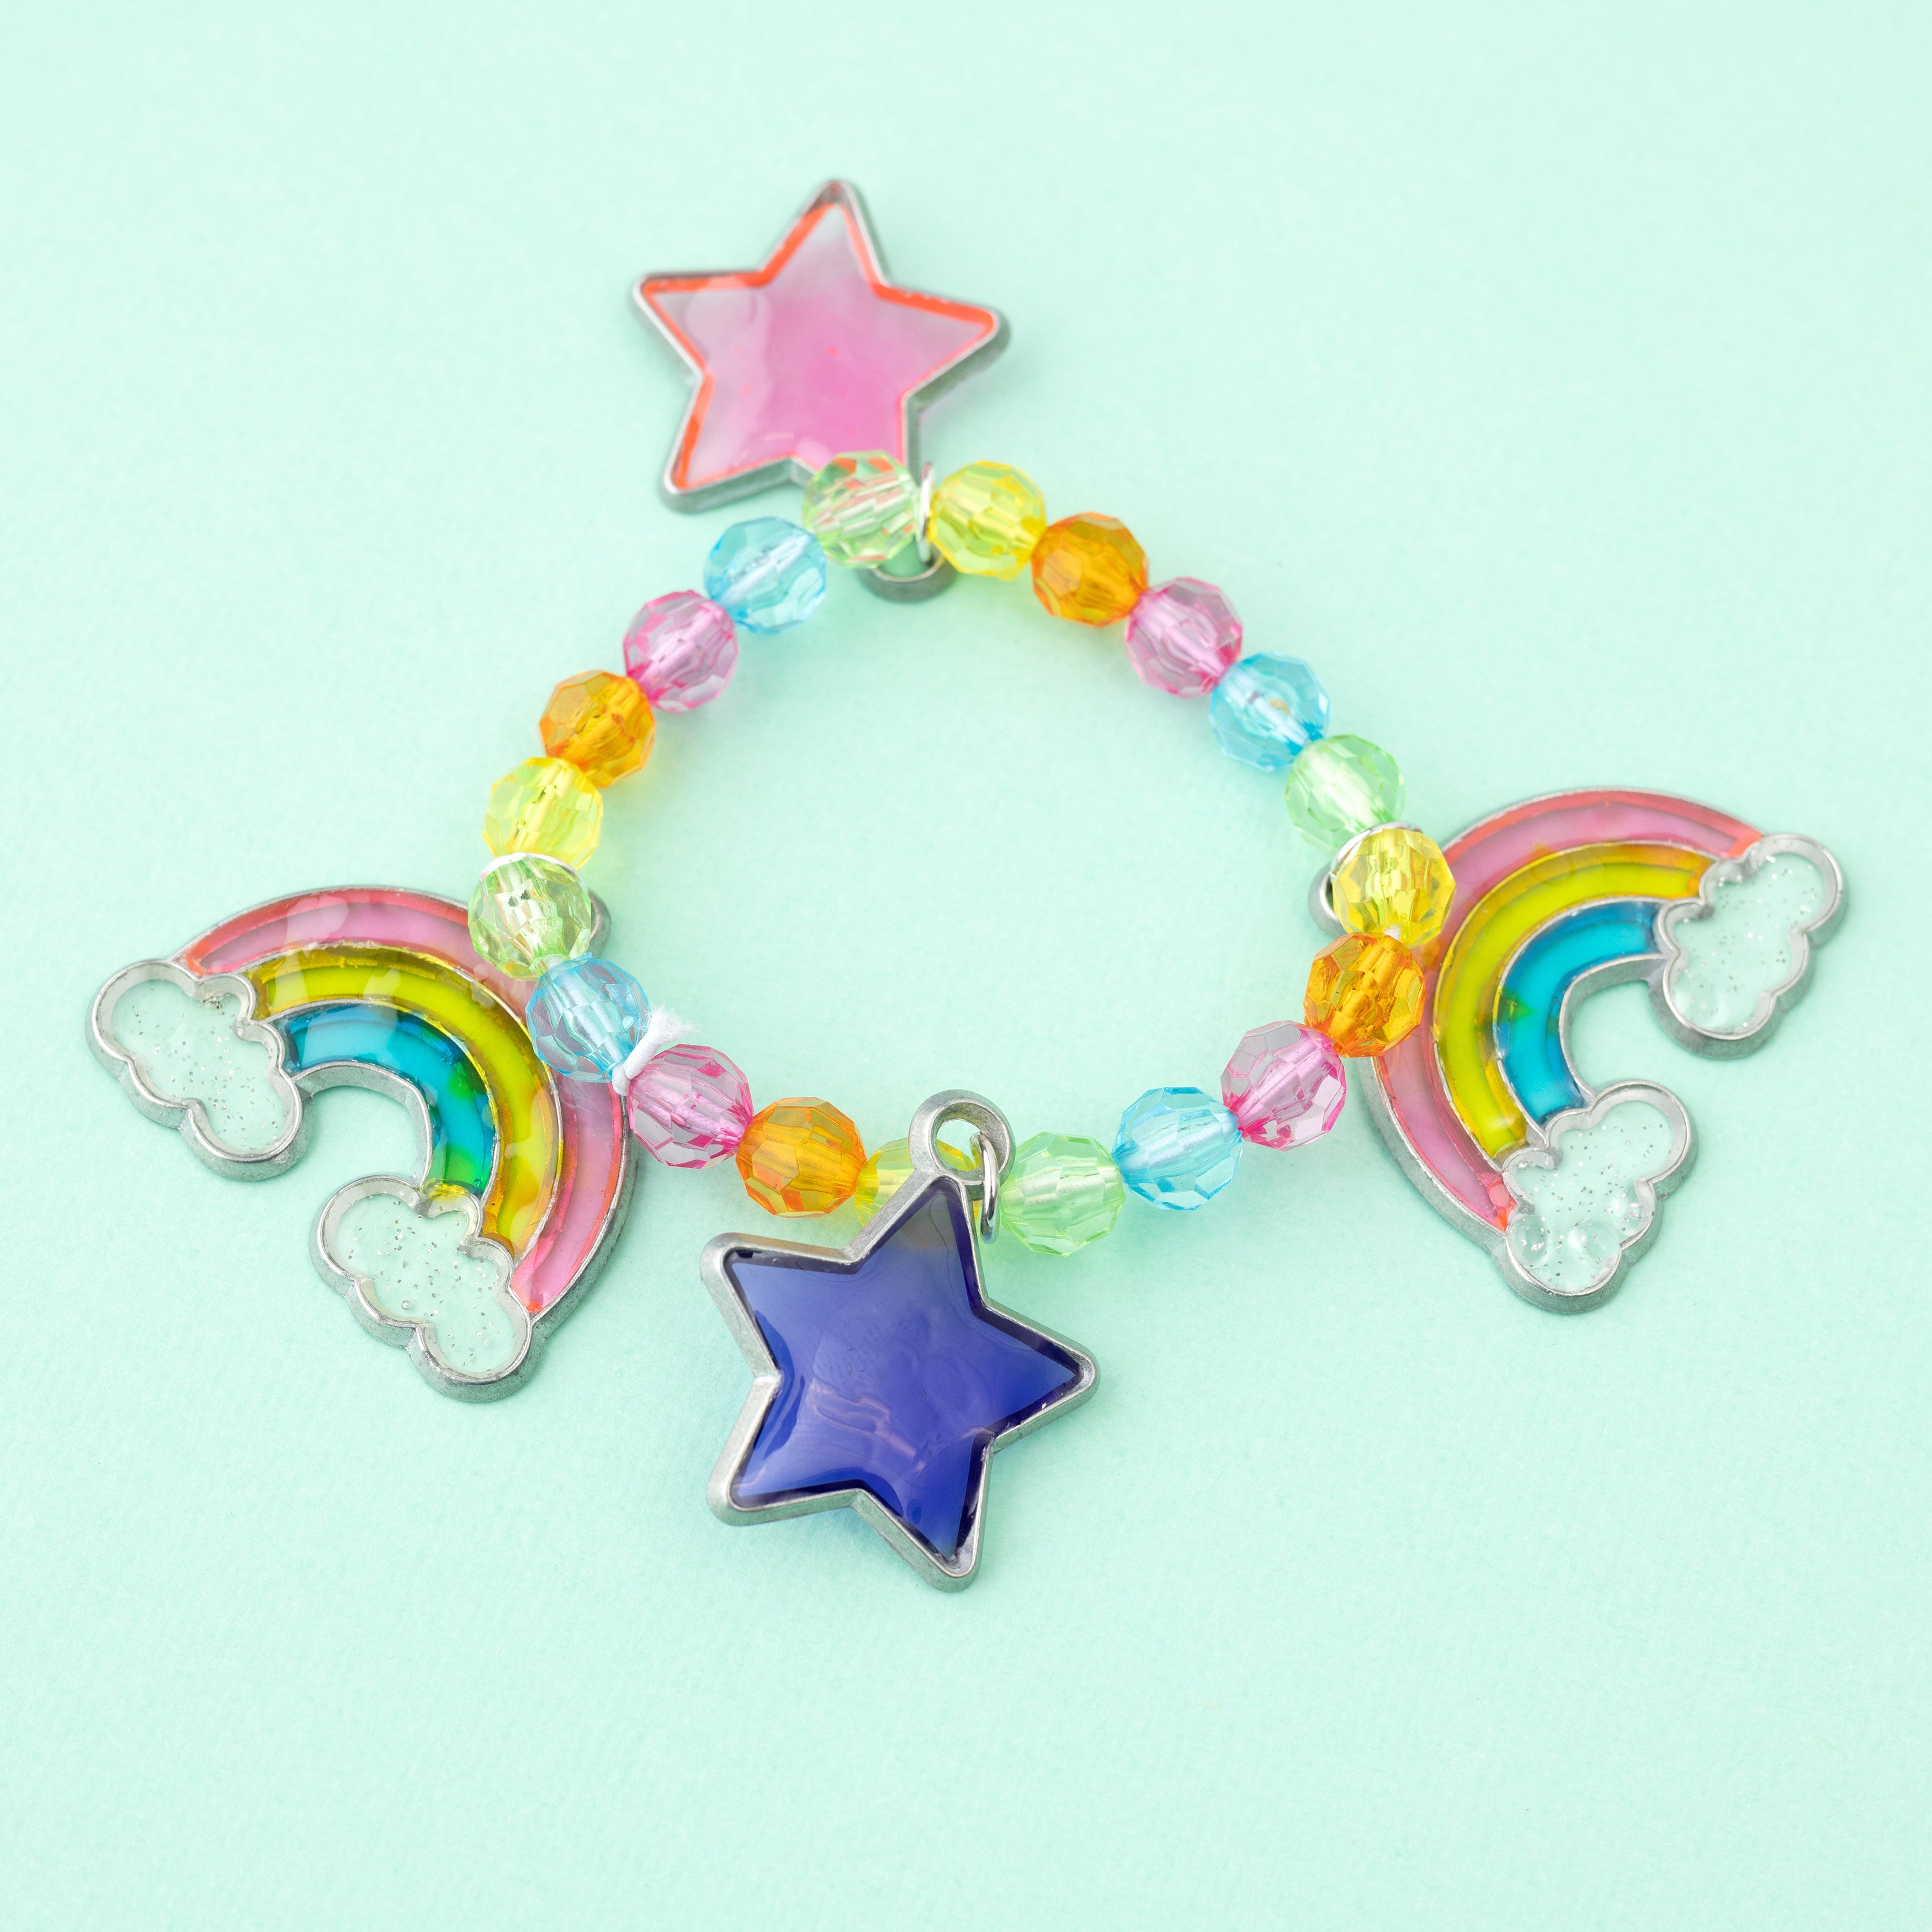 A beaded bracelet with stars and rainbow sun catcher charms.